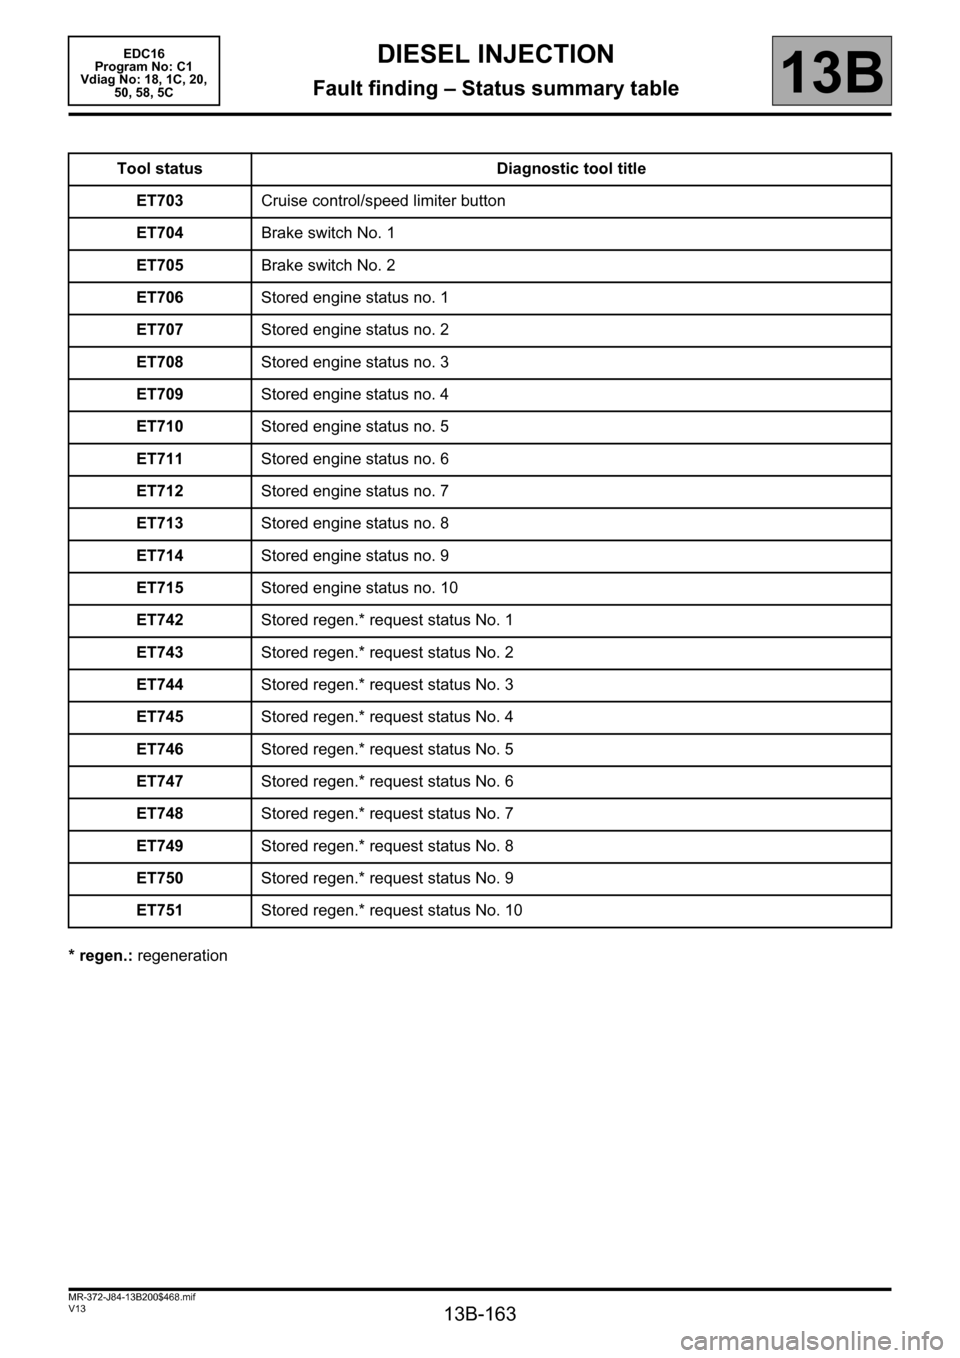 RENAULT SCENIC 2011 J95 / 3.G Engine And Peripherals EDC16 Workshop Manual 13B-163
MR-372-J84-13B200$468.mif
V13
DIESEL INJECTION
Fault finding – Status summary table
EDC16  
Program No: C1 
Vdiag No: 18, 1C, 20,  
50, 58, 5C
13B
* regen.: regeneration Tool status Diagnost